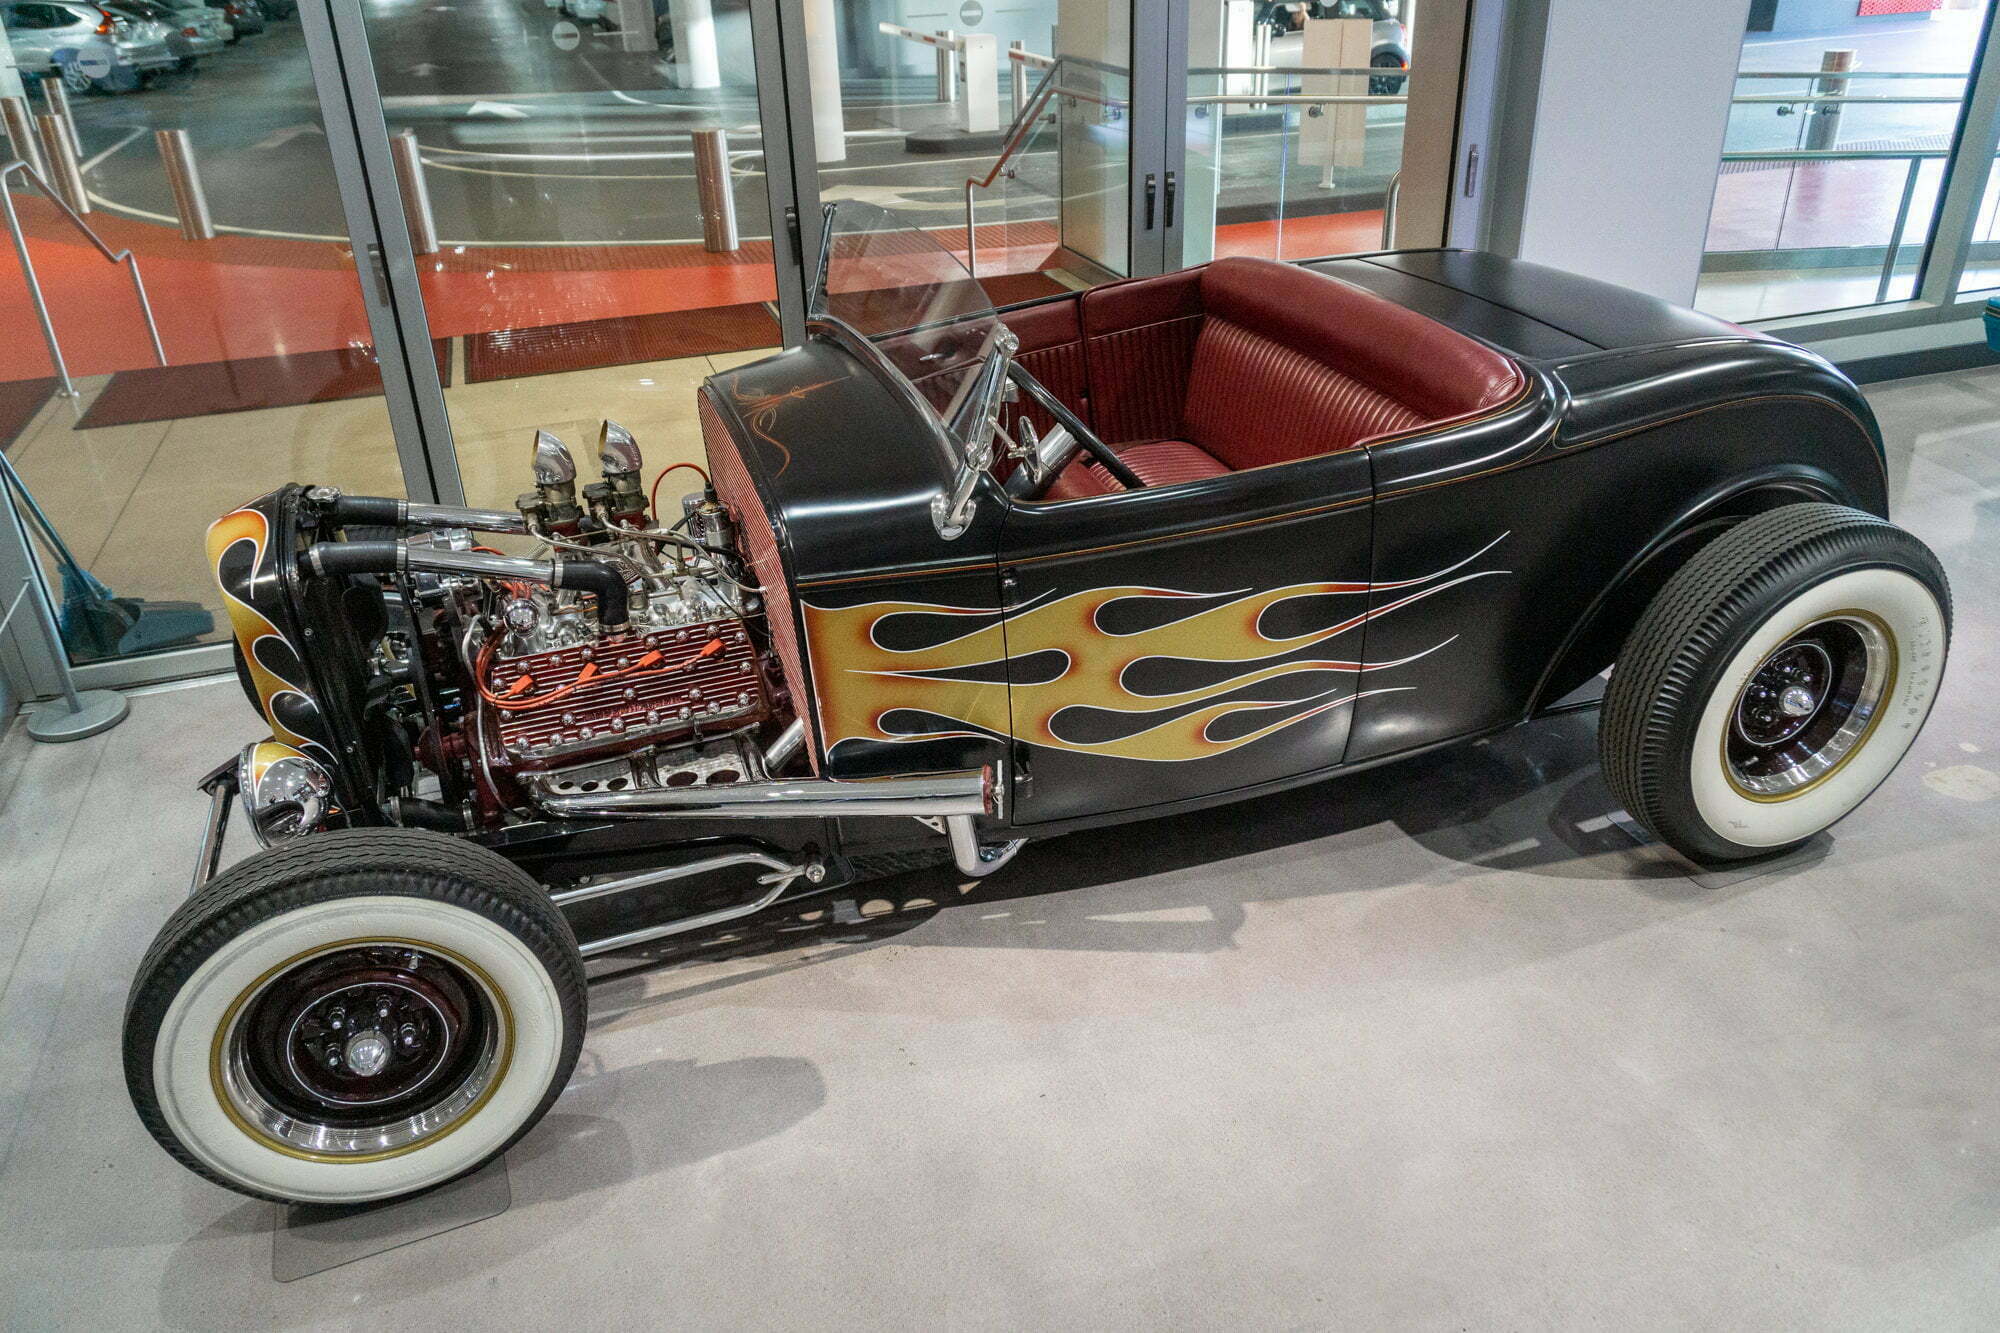 Iron Man, Roadster, Xeno III*Petersen Museum